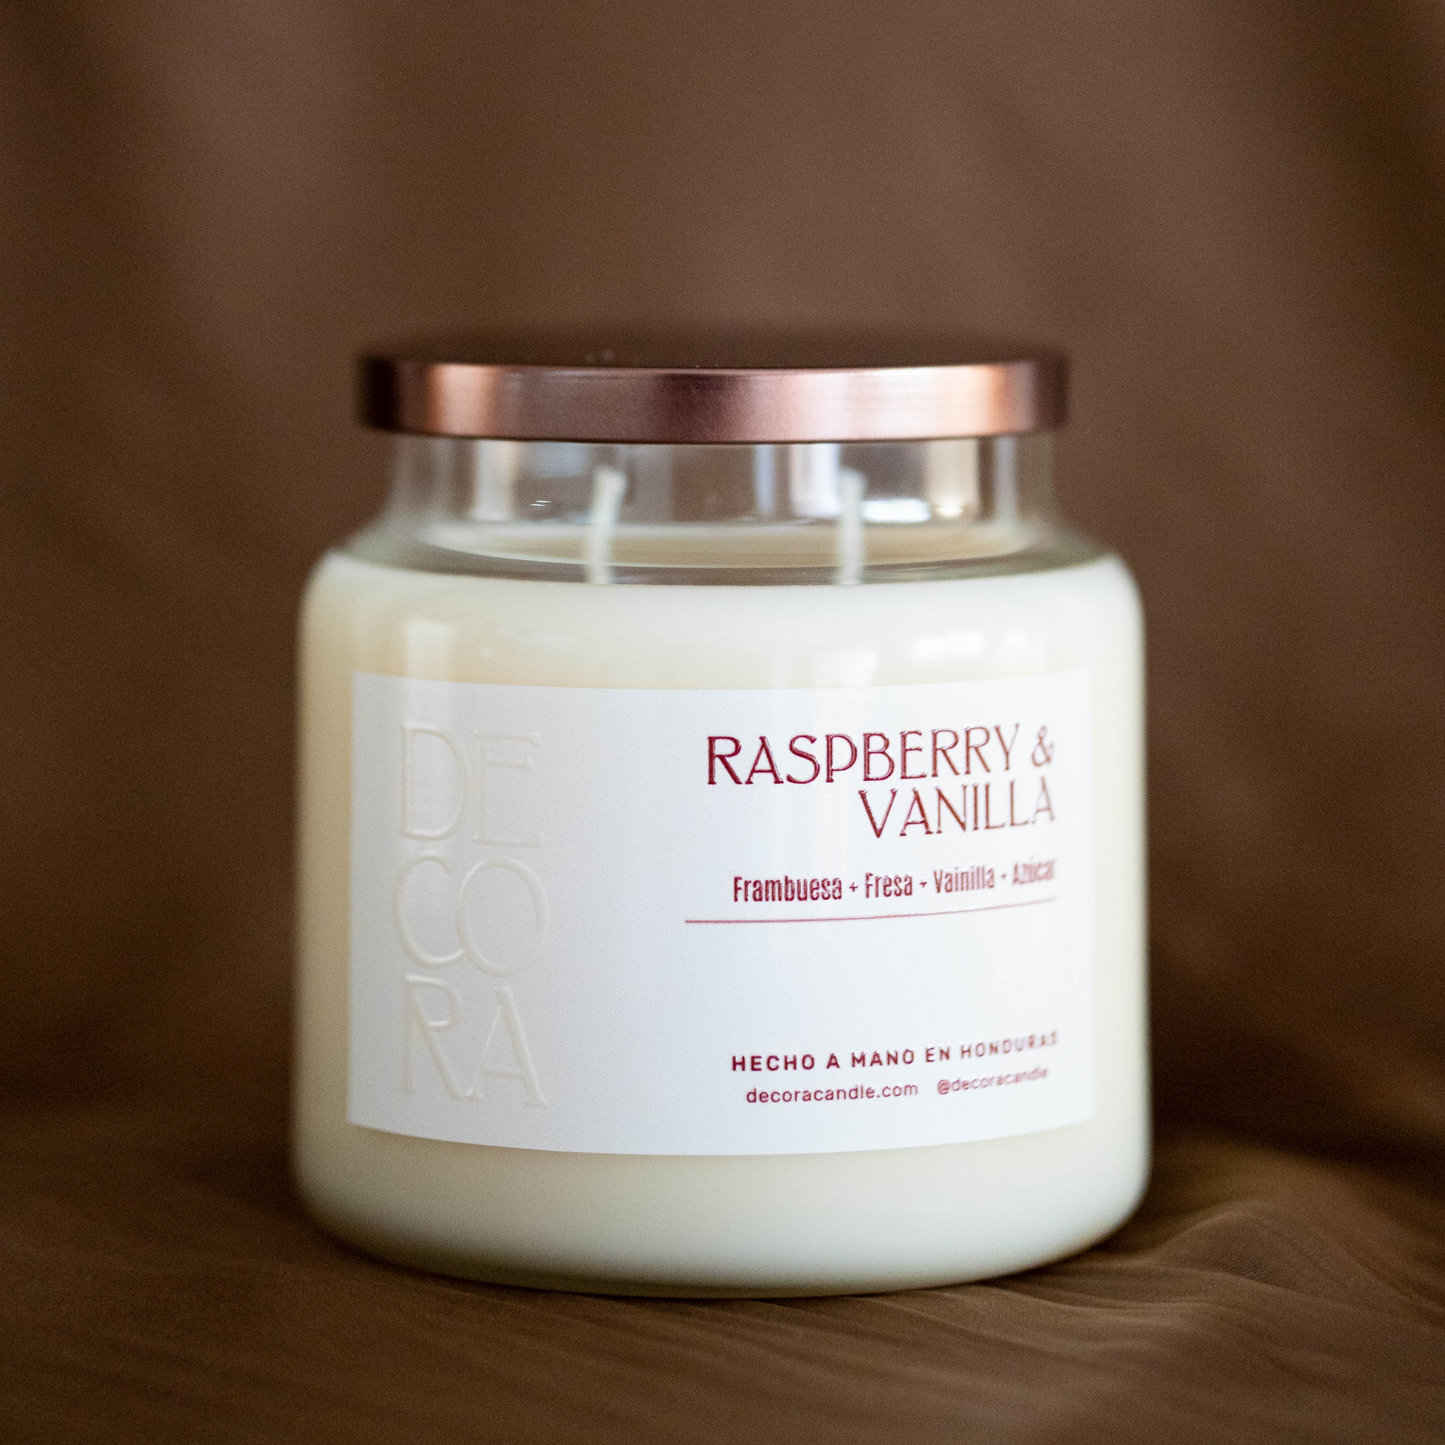 Raspberry & Vanilla - Apothecary Candle 16 oz